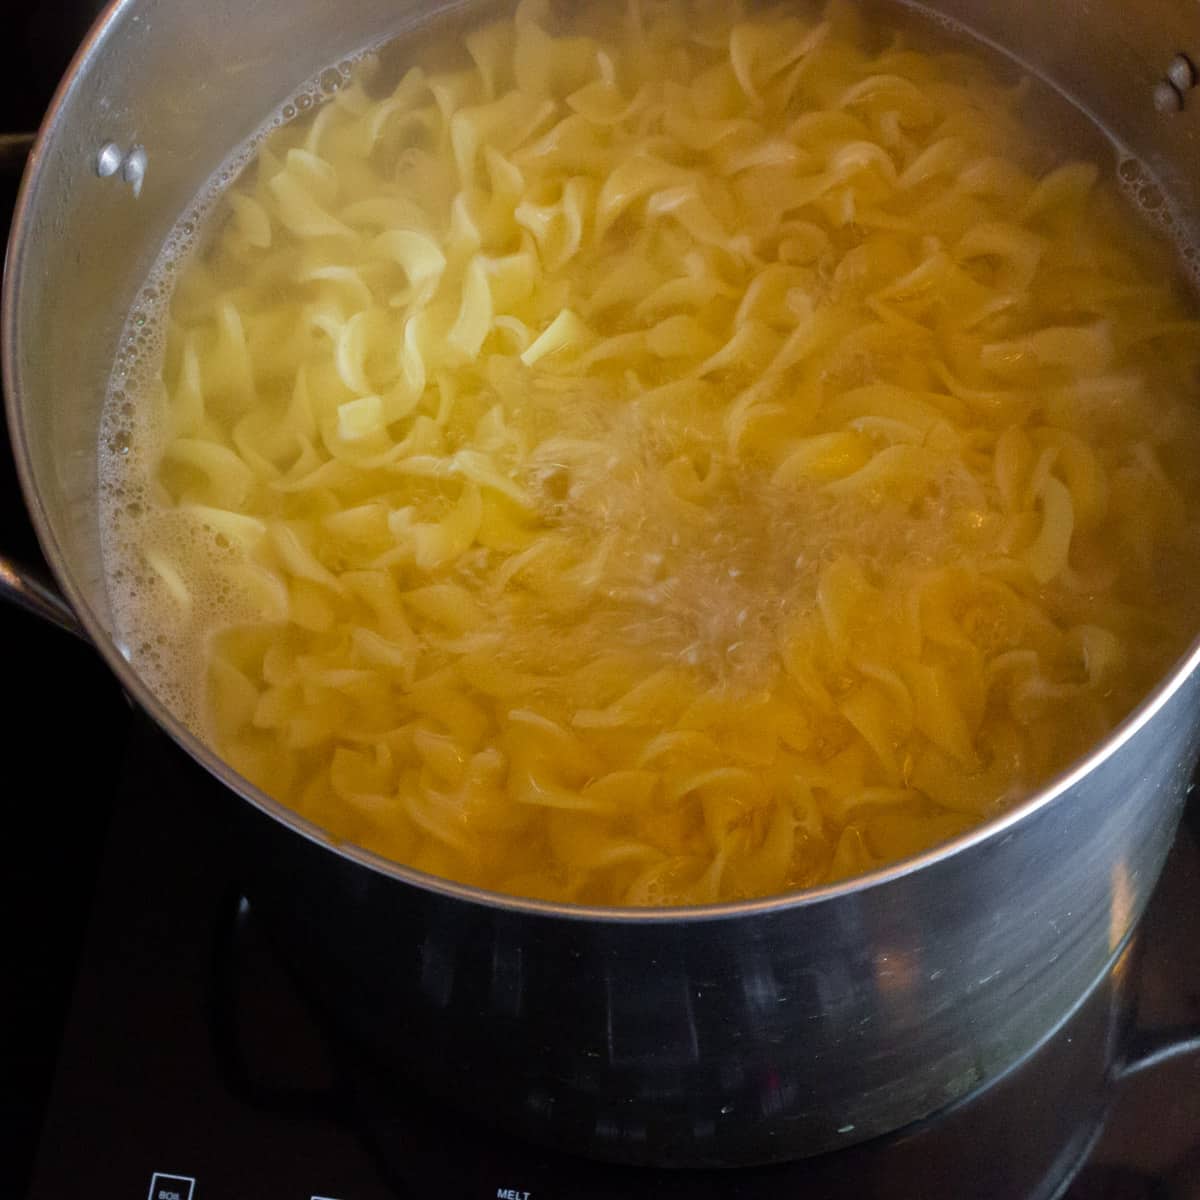 A pot of egg noodles cooking.